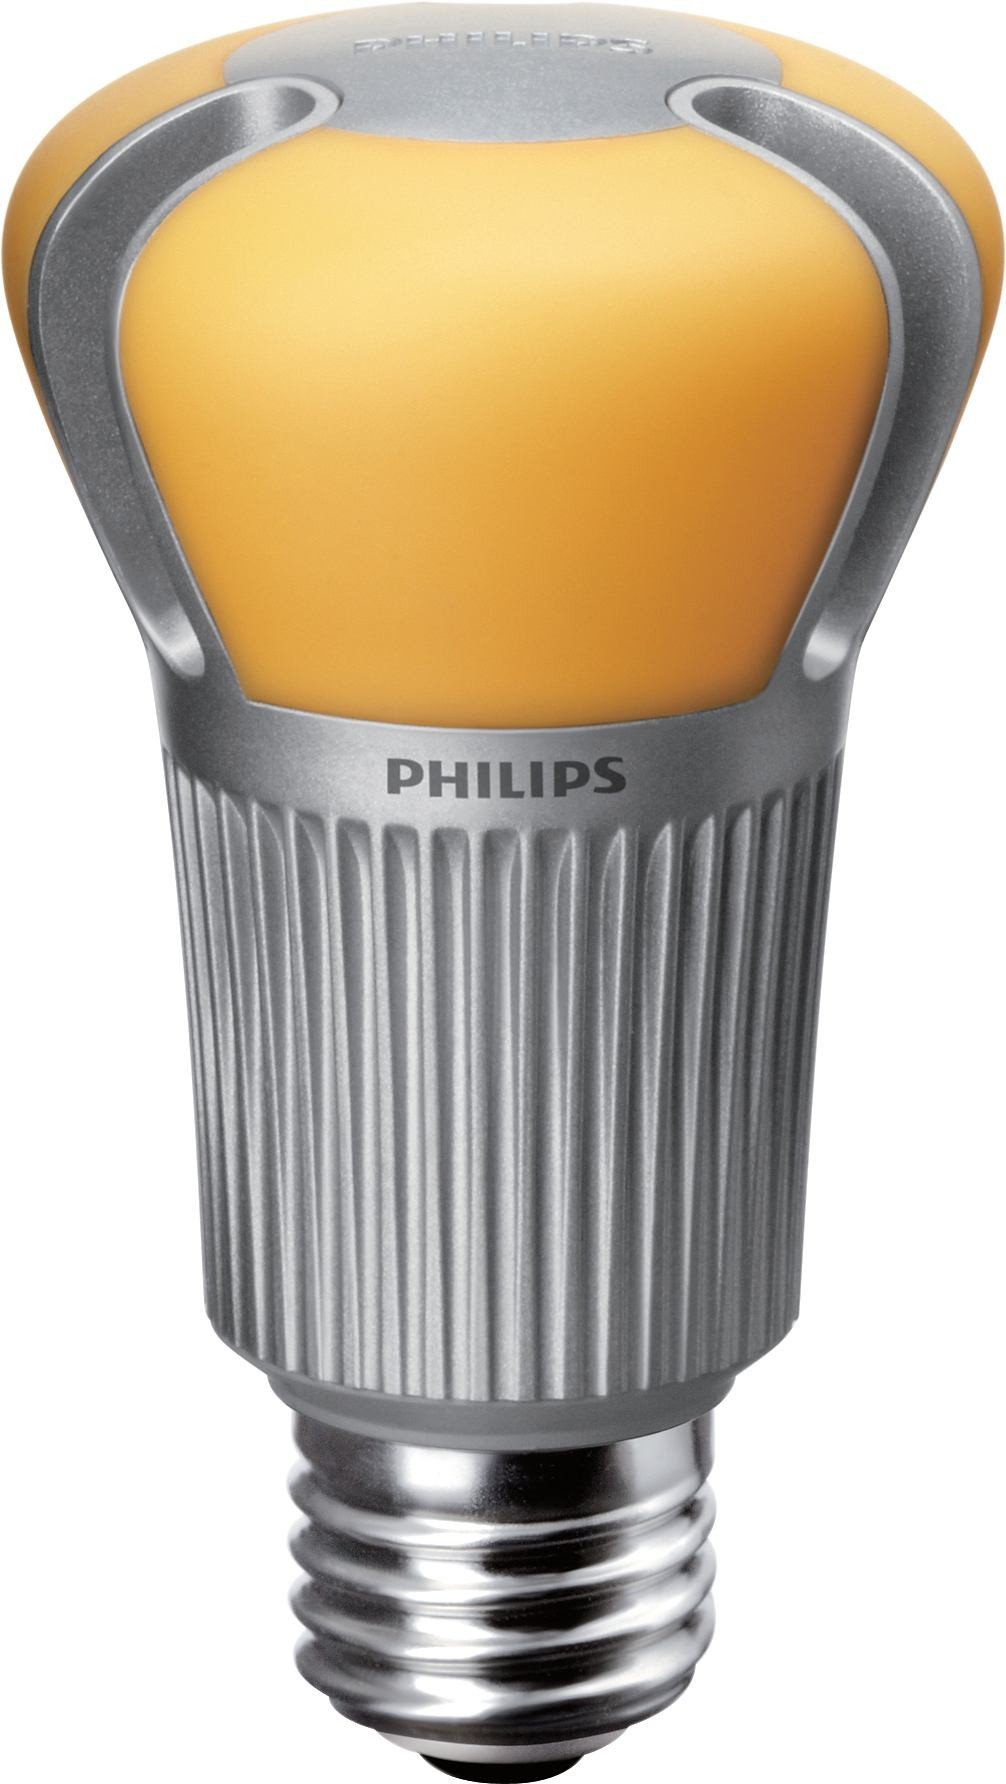 Philips E27 LED Light Bulb - Edison Screw Globe